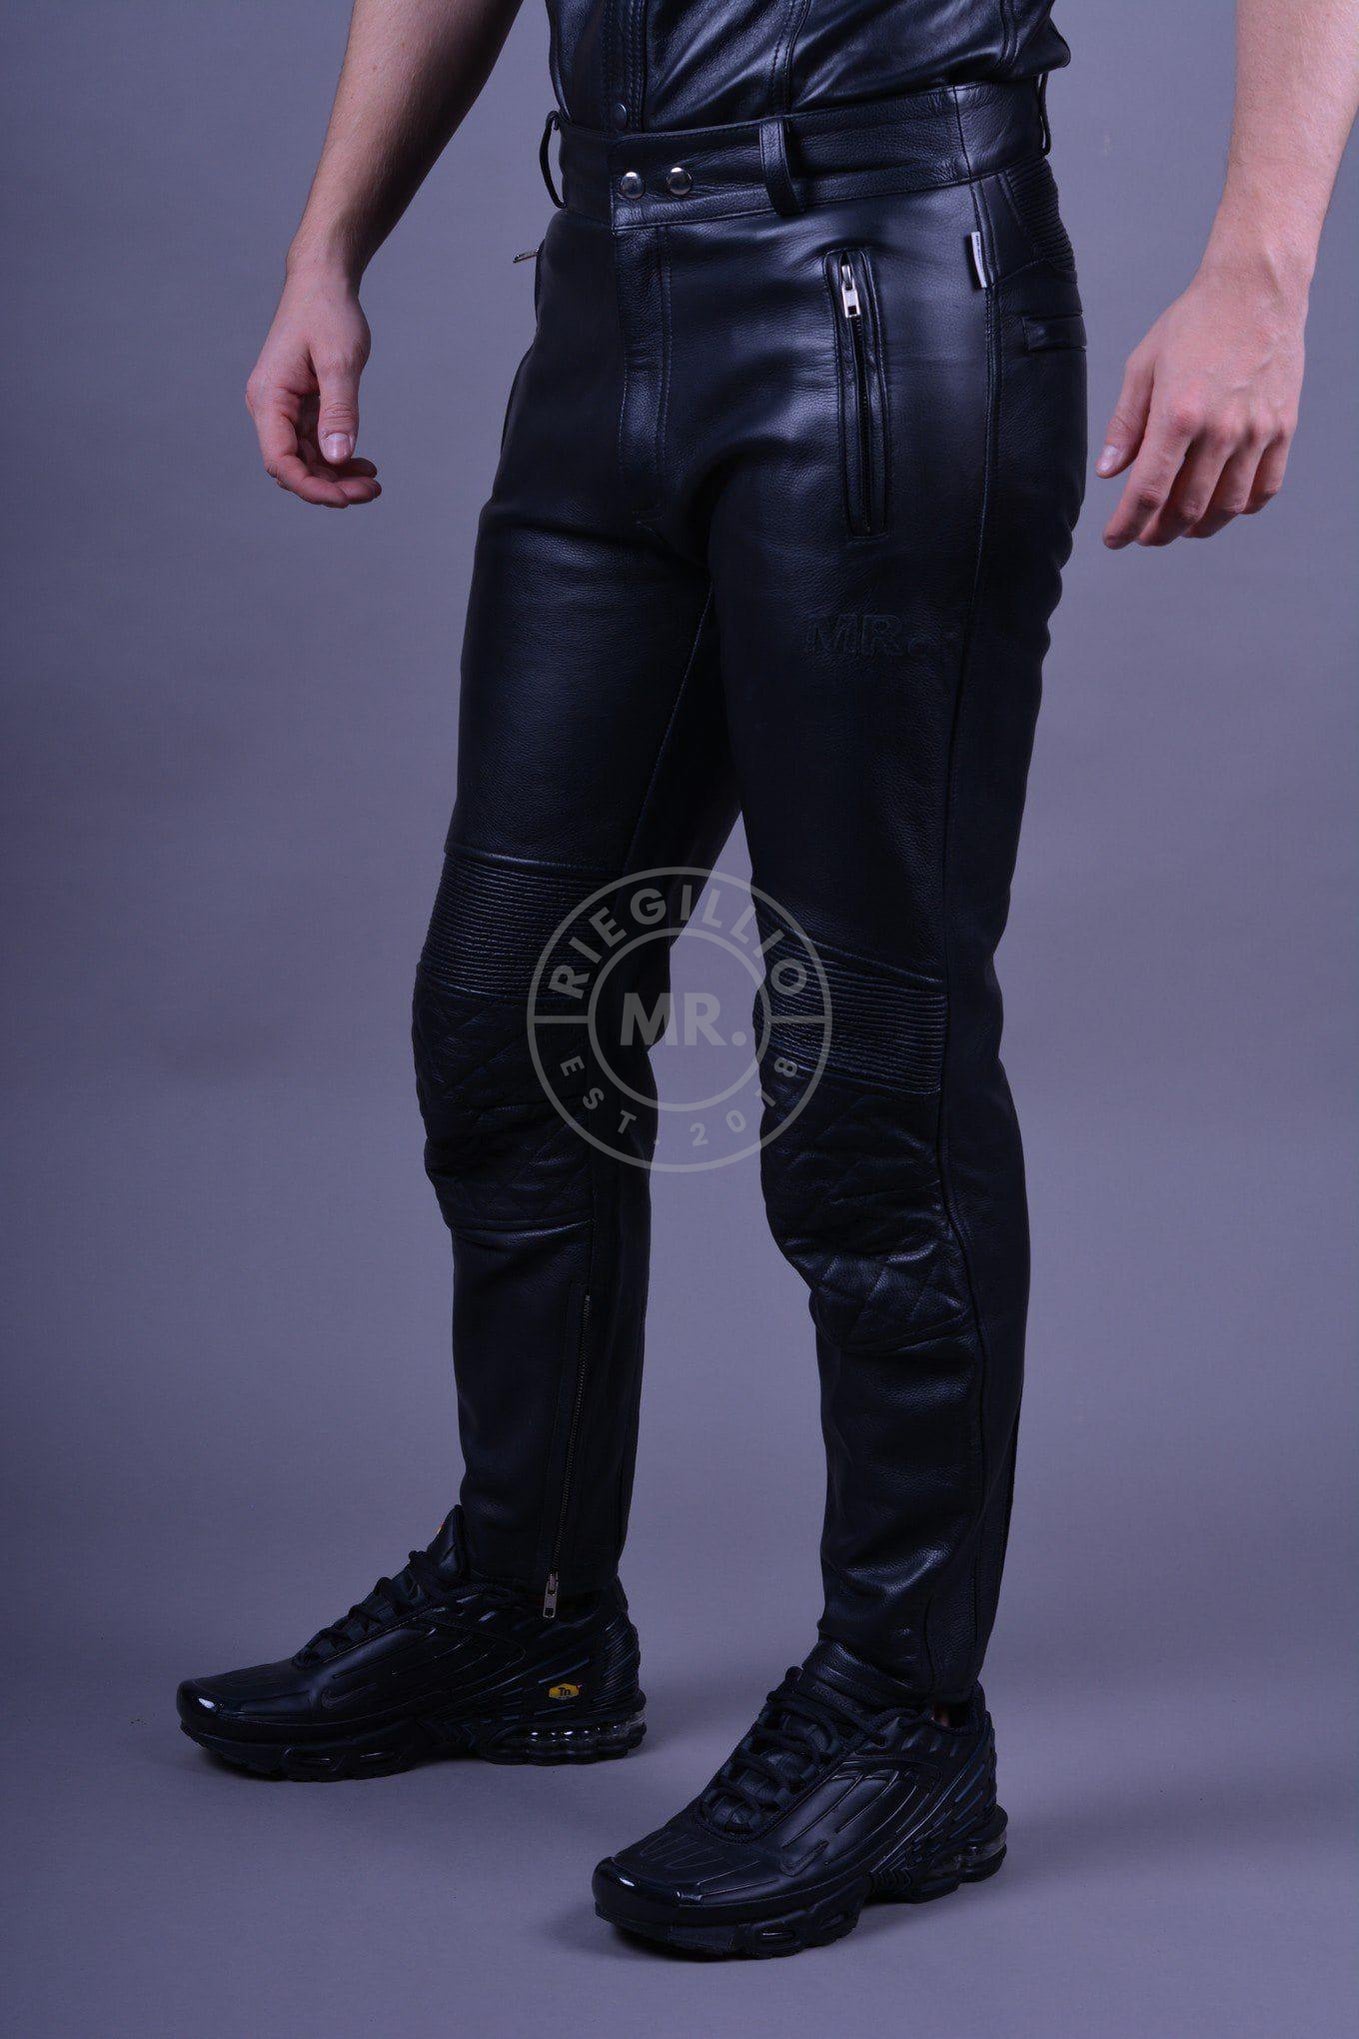 Leather Motorbike Pants by Mr Riegillio